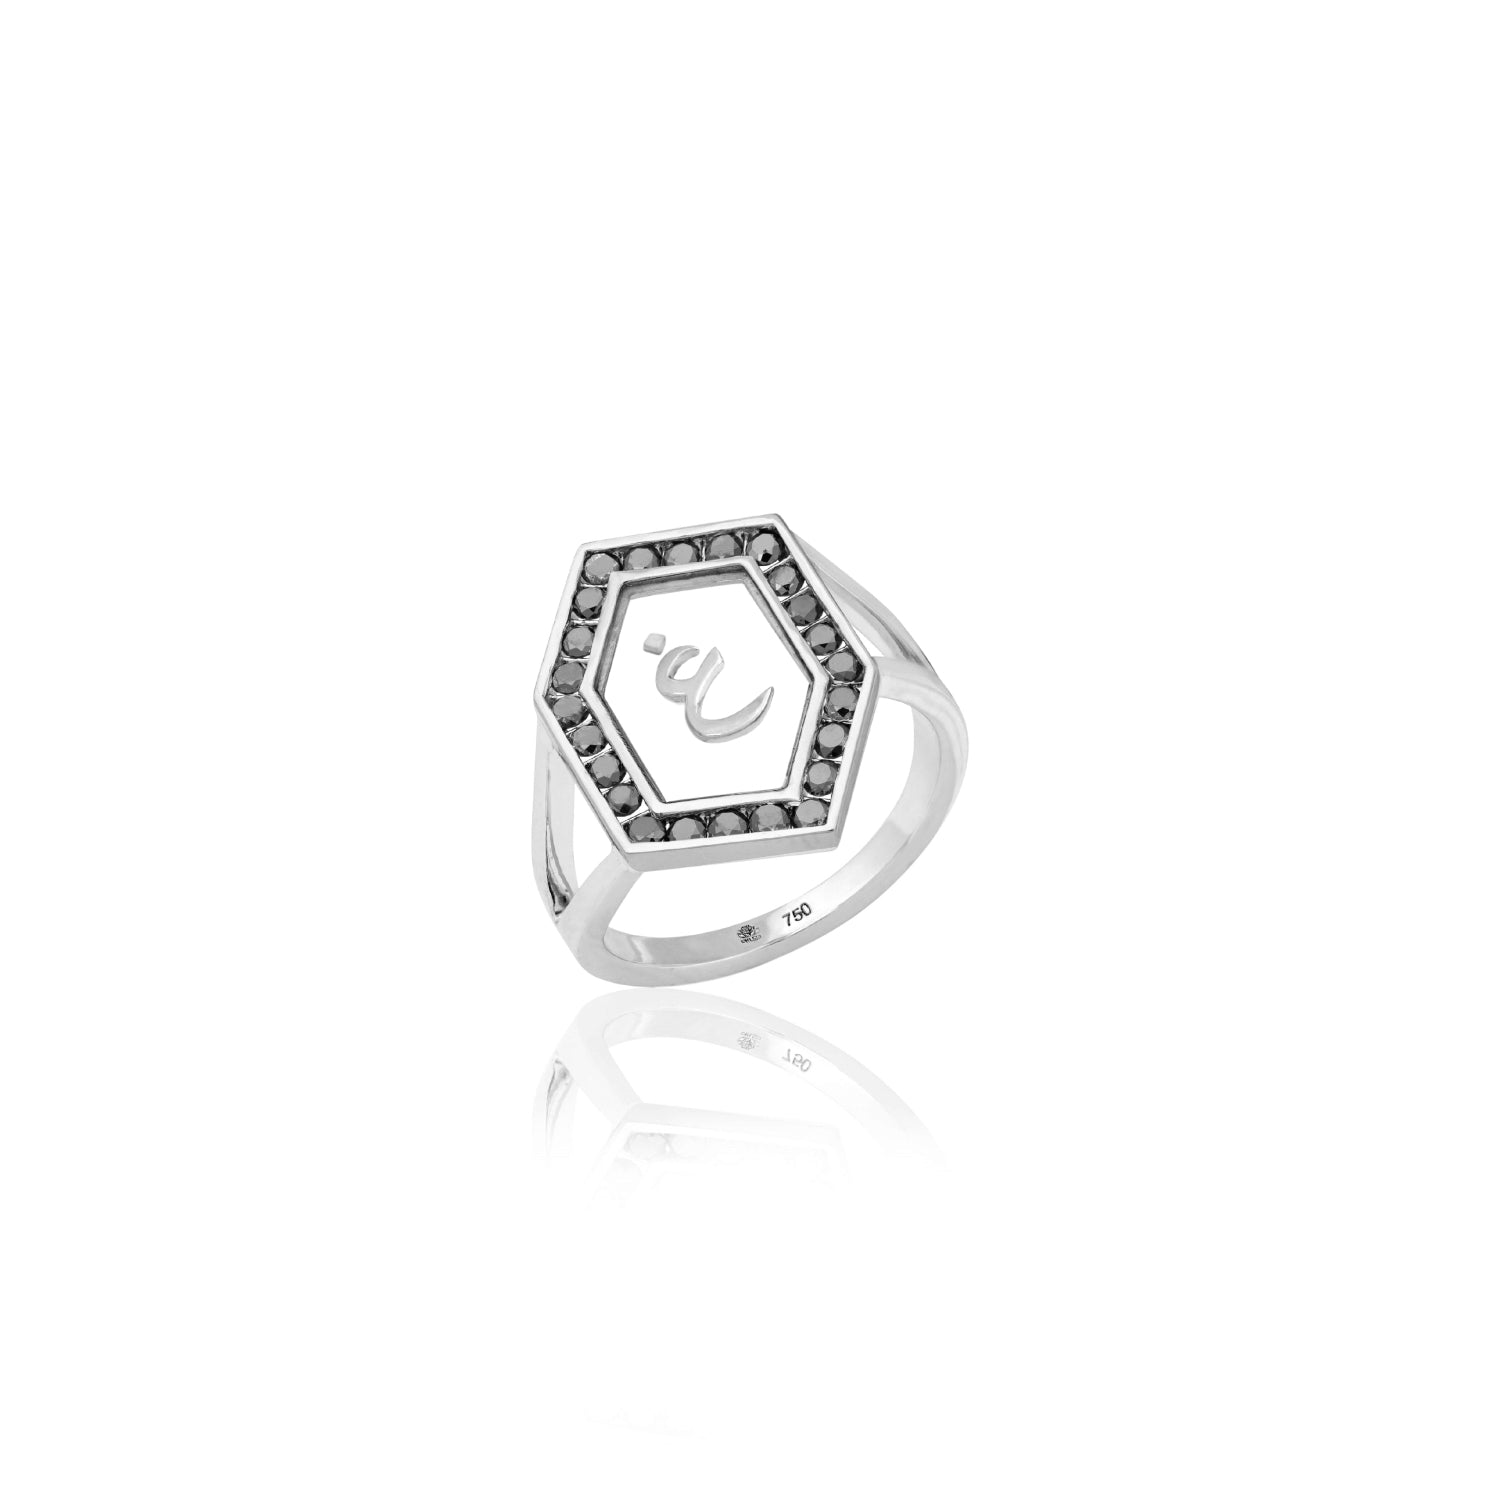 Qamoos 1.0 Letter غ Black Diamond Ring in White Gold